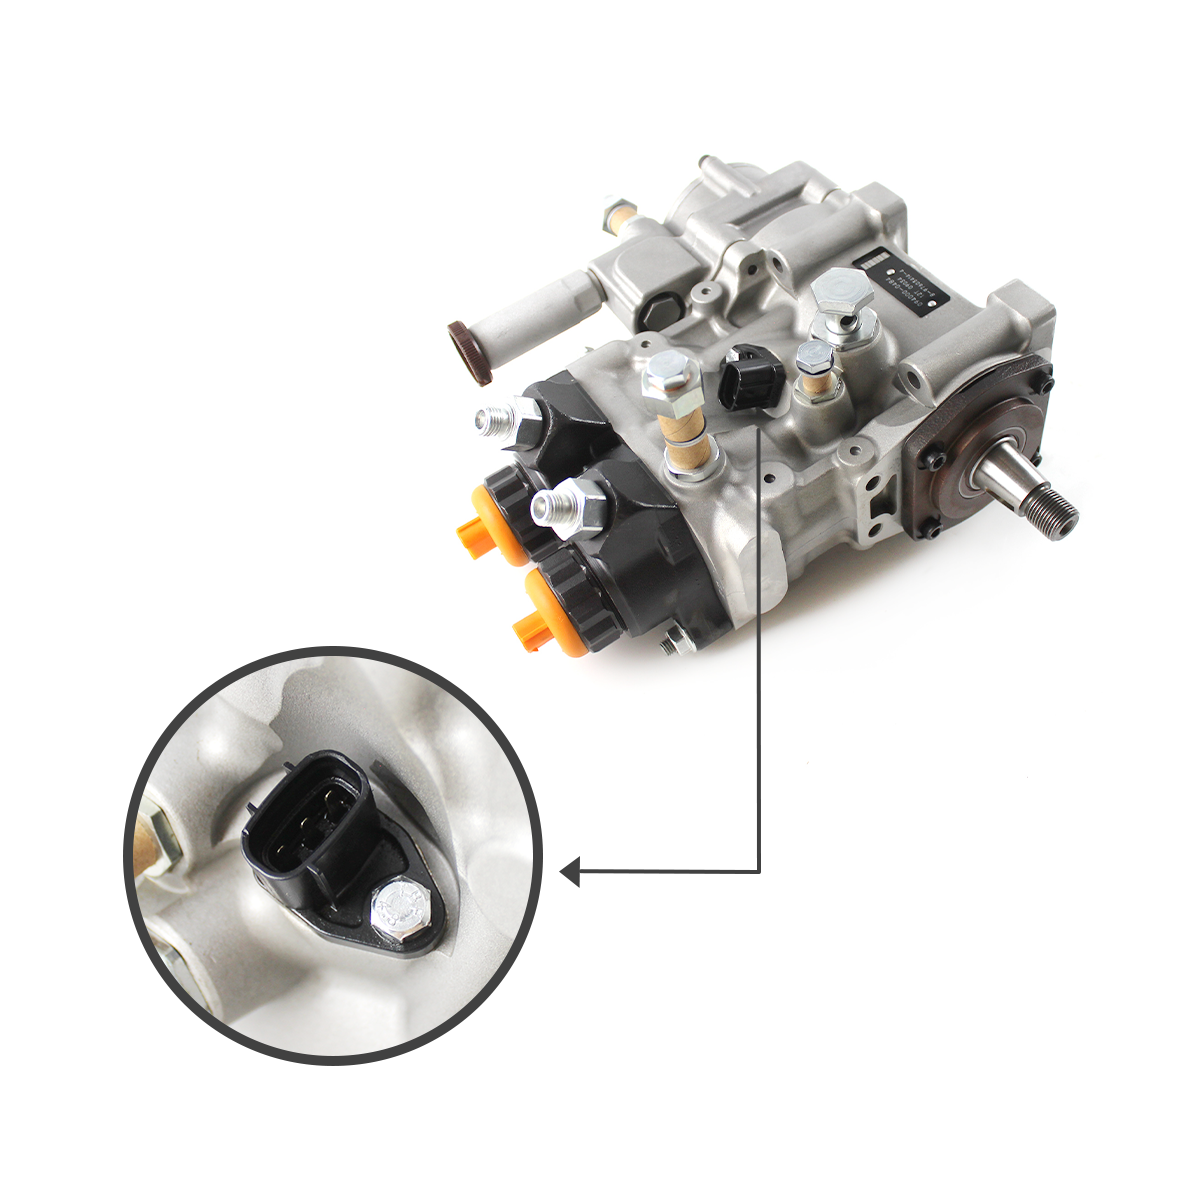 6251-71-1132 Fuel Injection Pump for Komatsu PC400-7 SA6D125-1 Engines